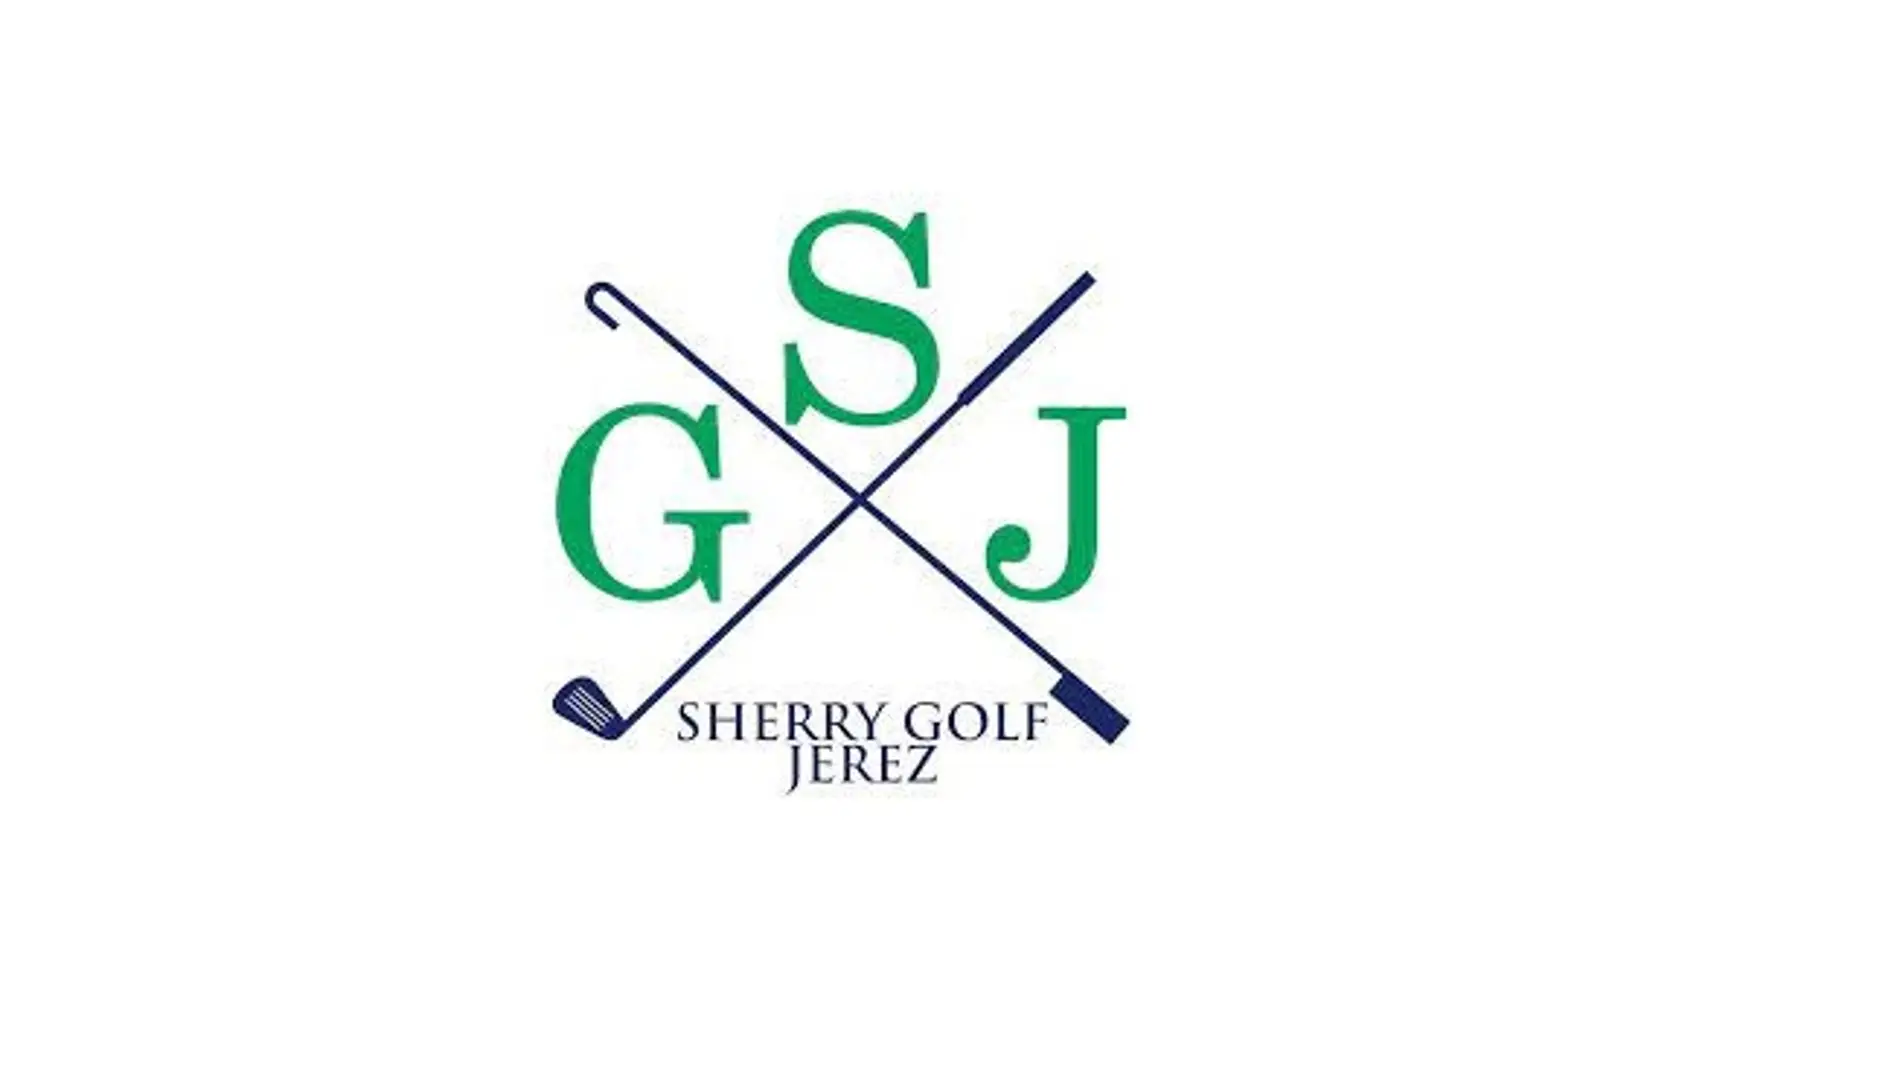 Sherry Golf